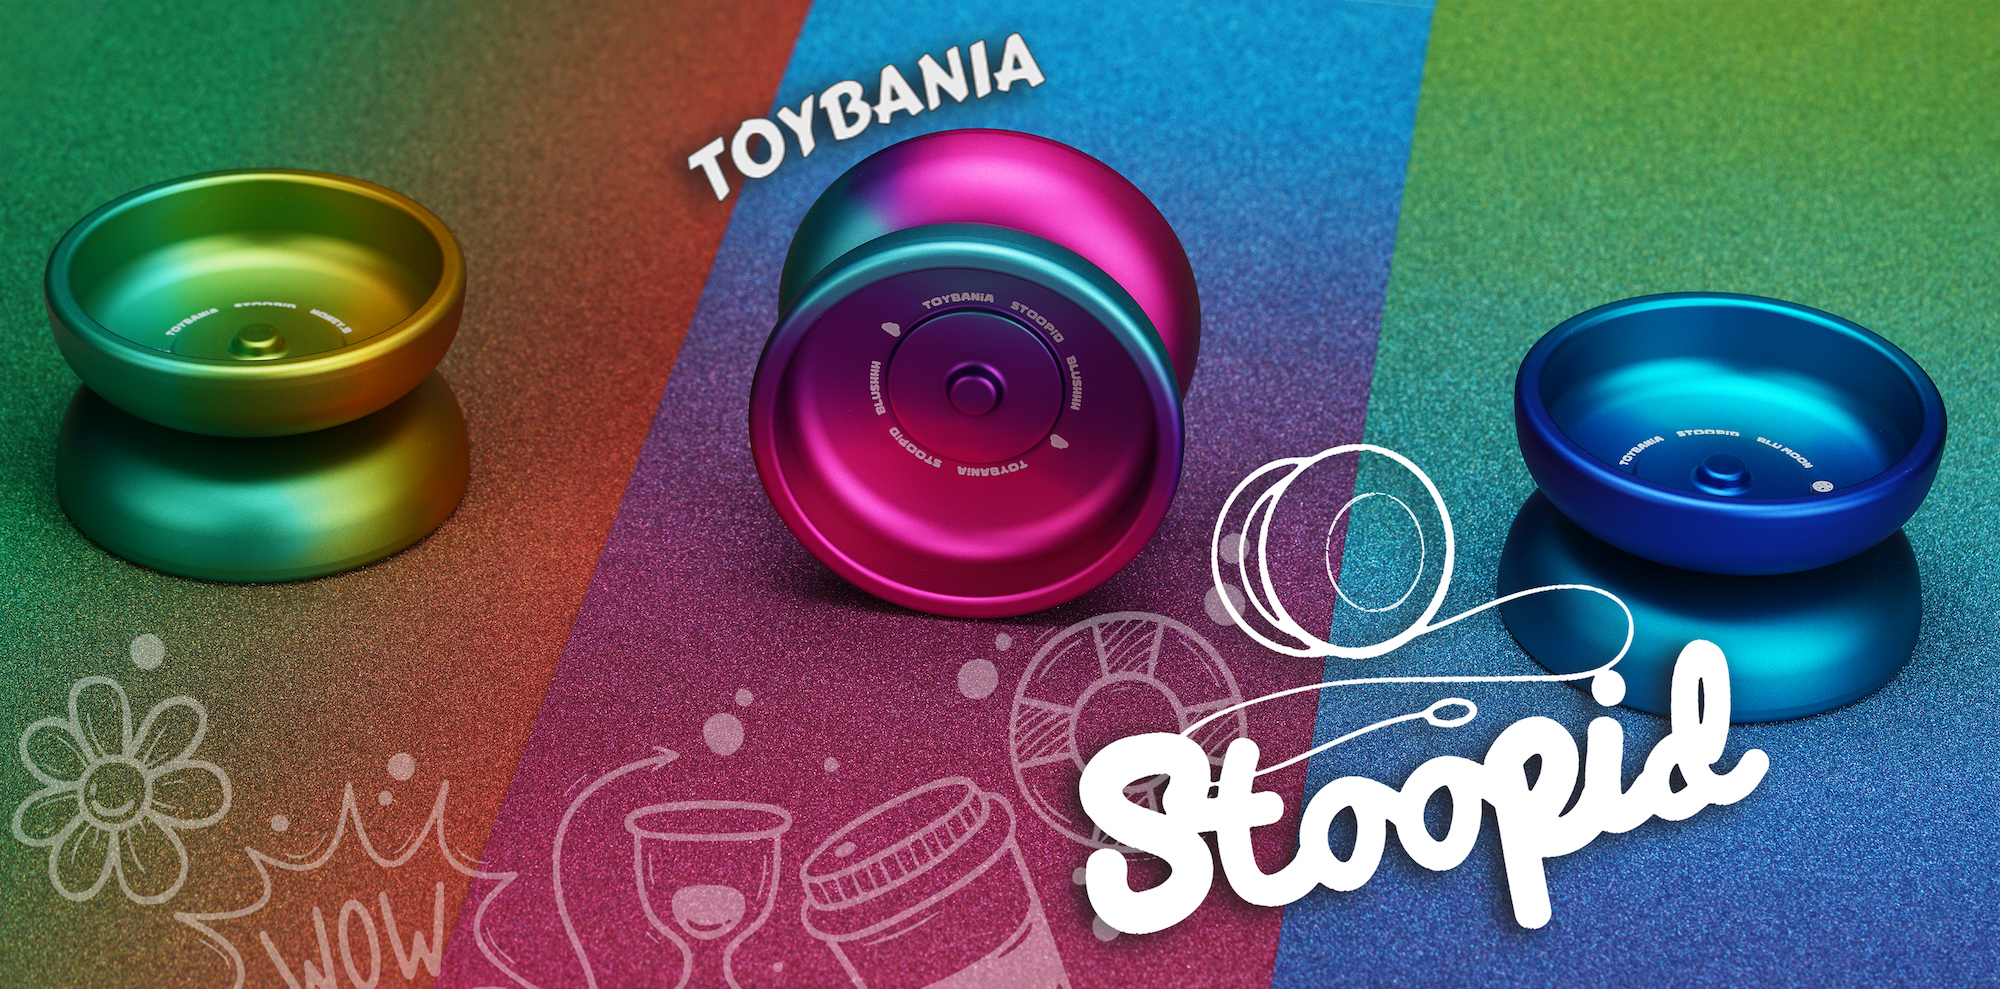 Stoopid by Toybania